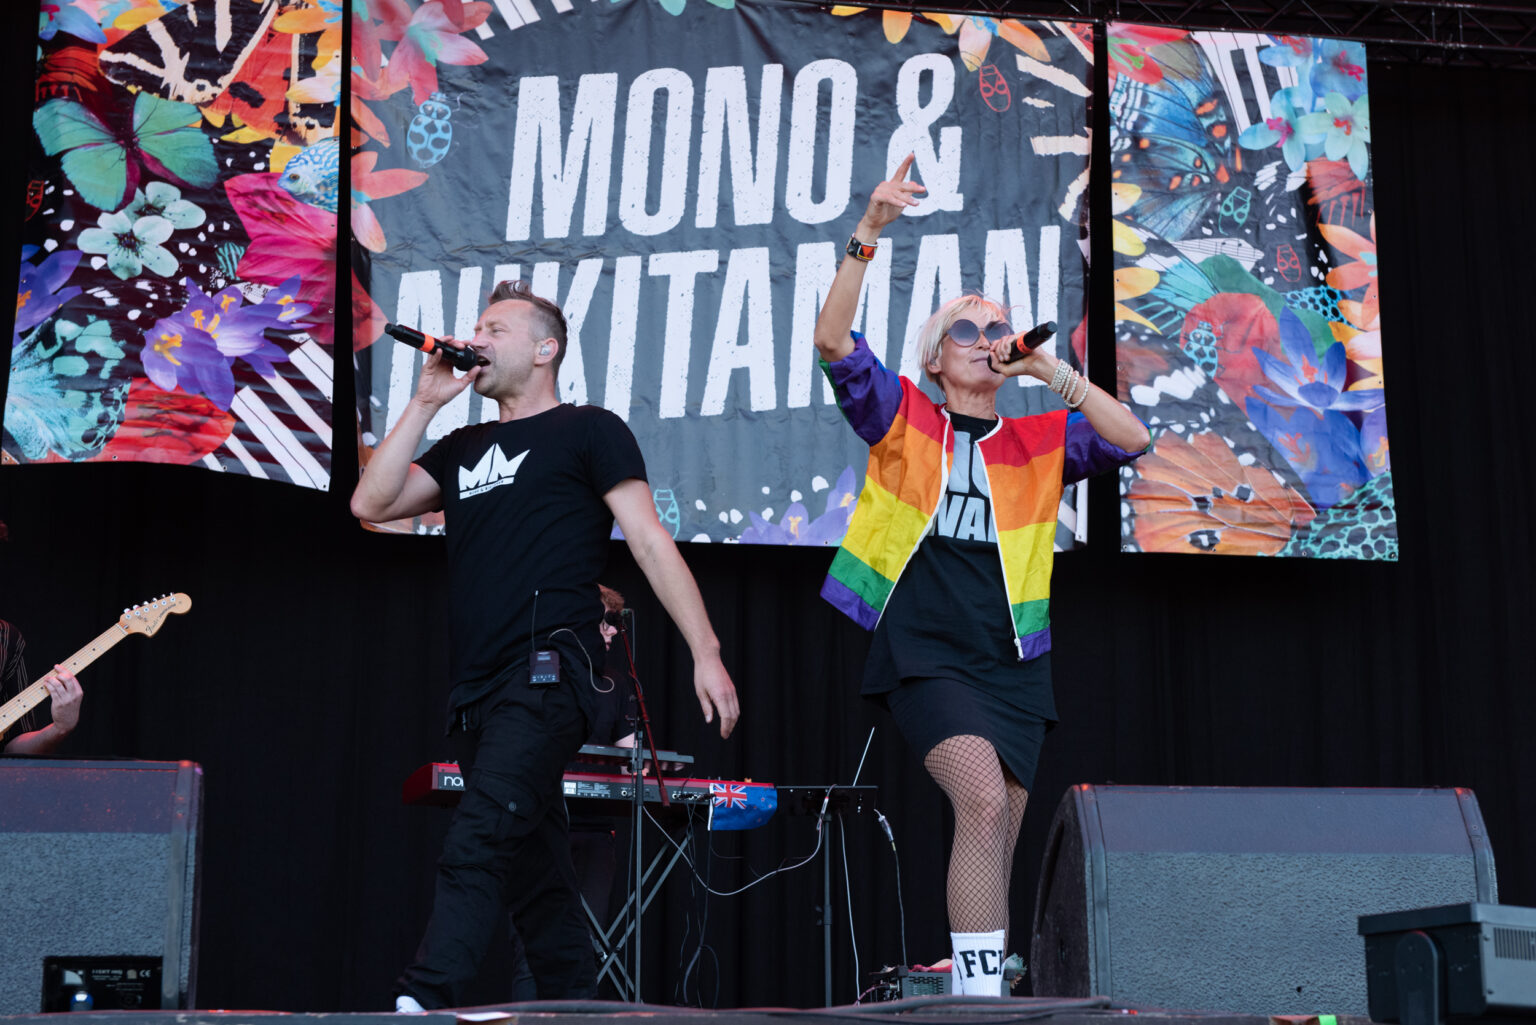 Mono & Nikitaman at Nova Rock 2022